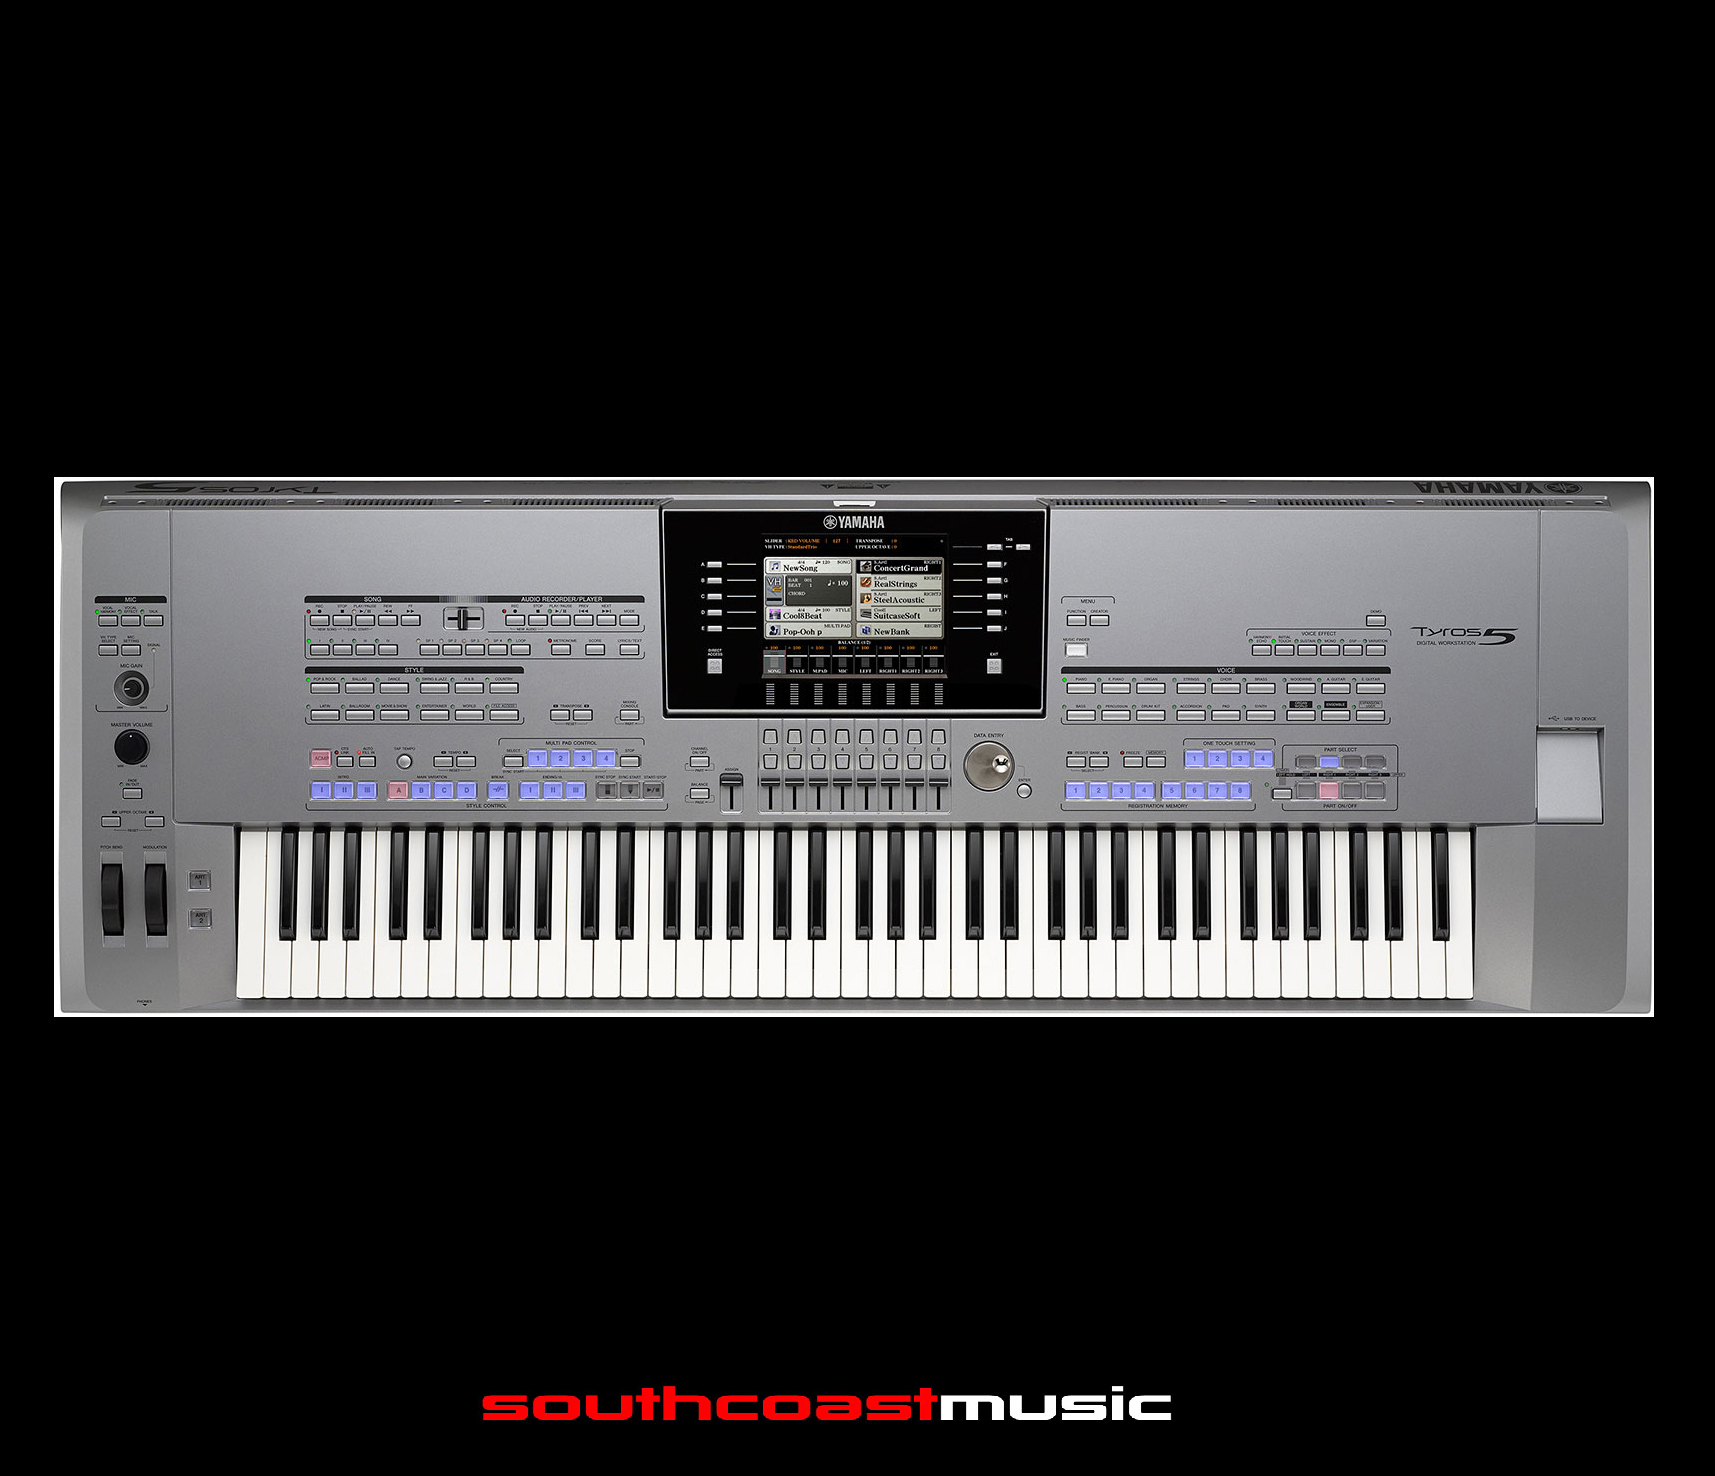 Yamaha TYROS5-76 note Premium Arranger Workstation Keyboard